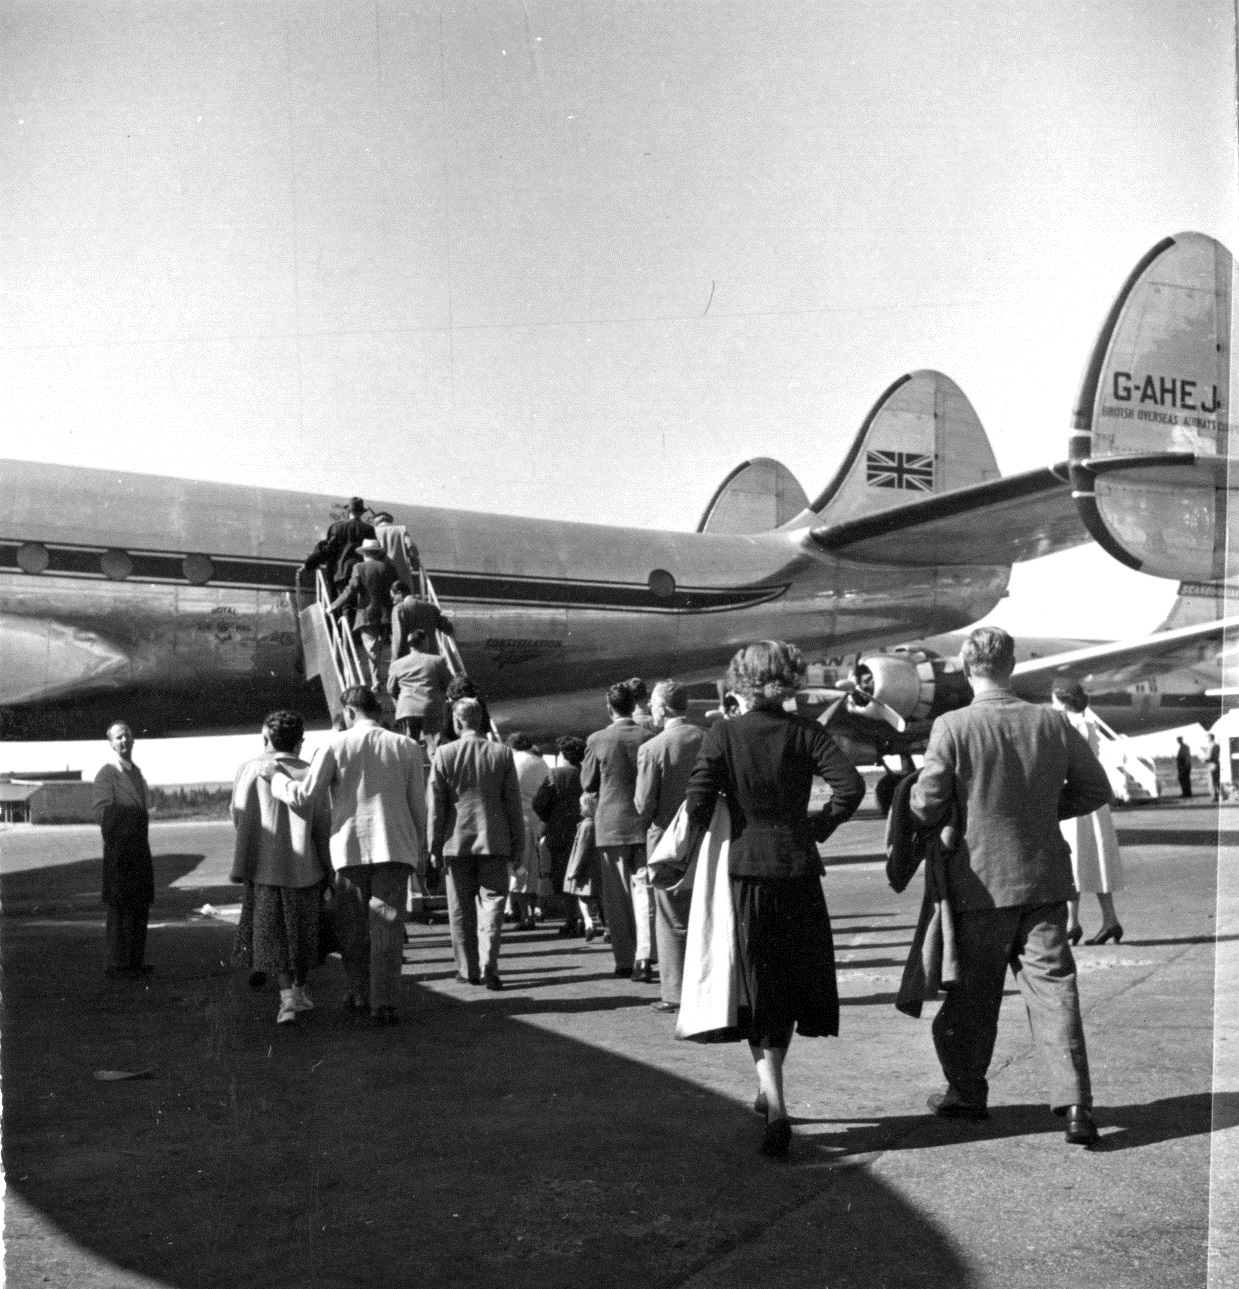 Passengers boarding a British airplane at Gander Airport.